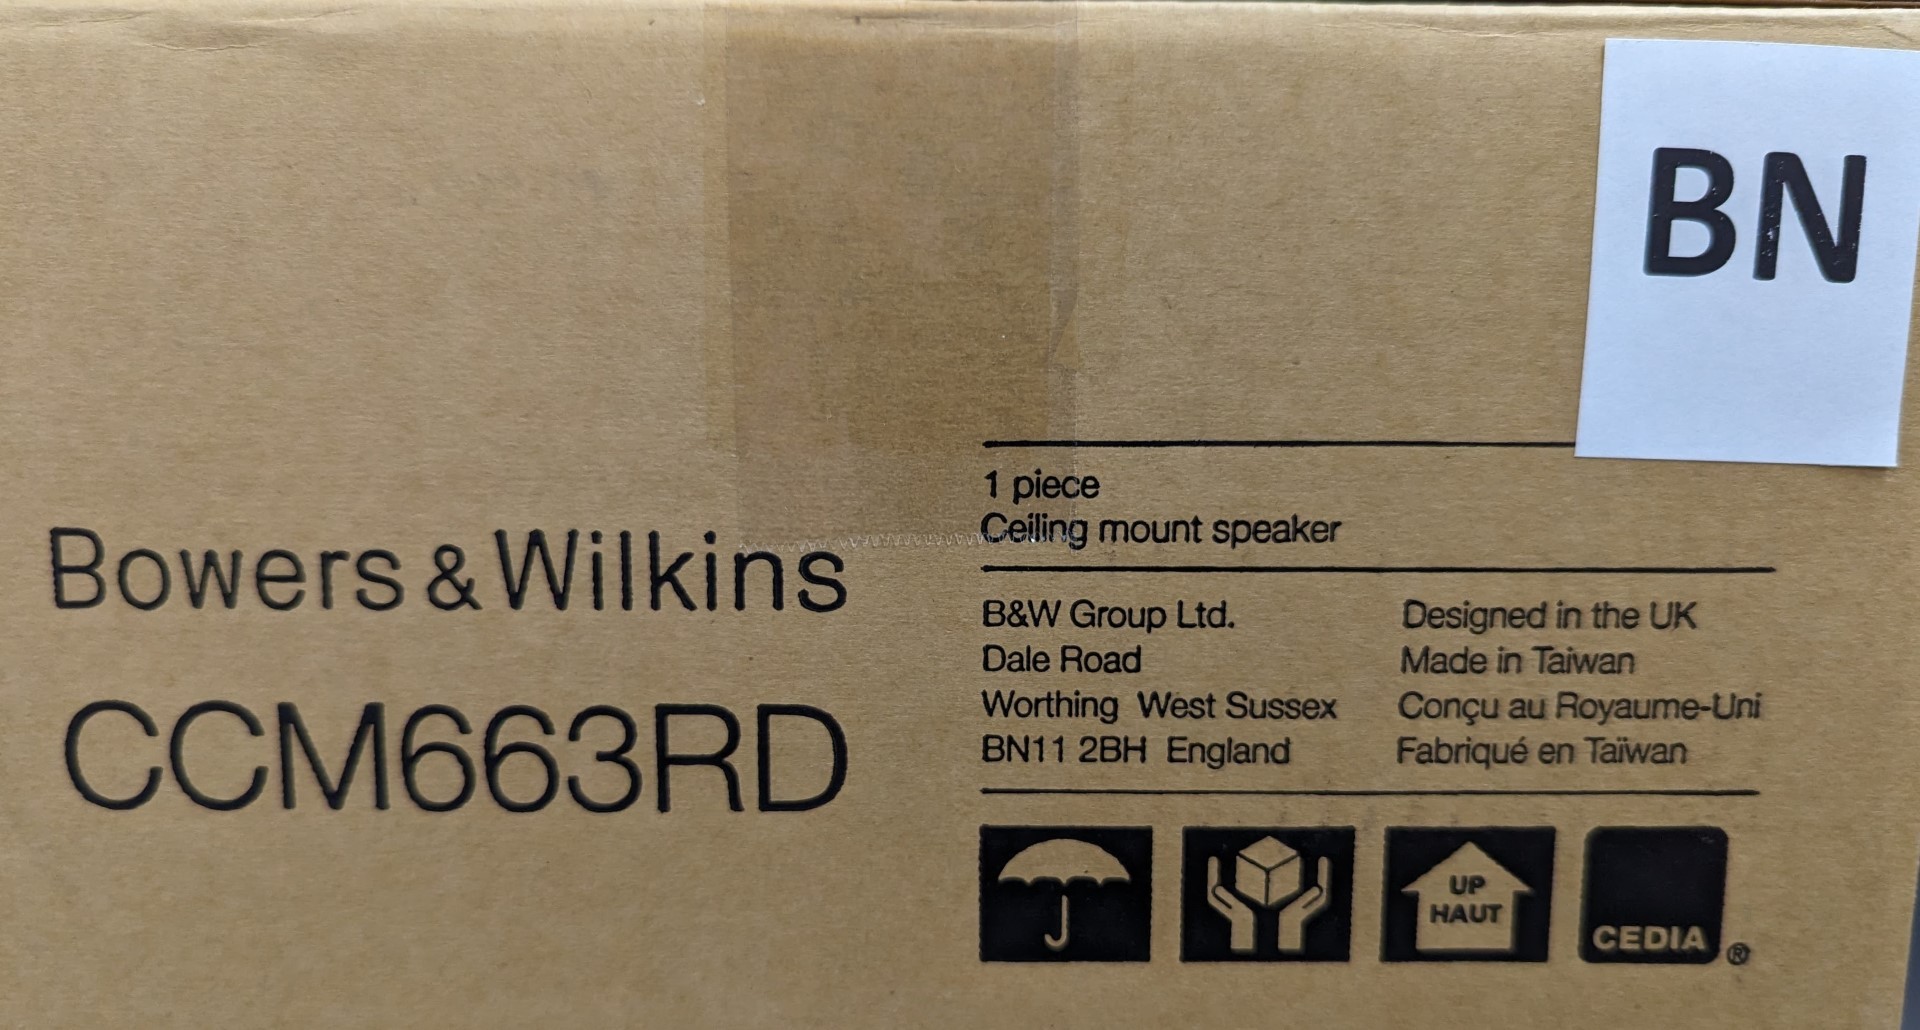 Bowers & Wilkins CI600 Series 663 Reduced Depth 6" In-Ceiling Speaker CCM663RD